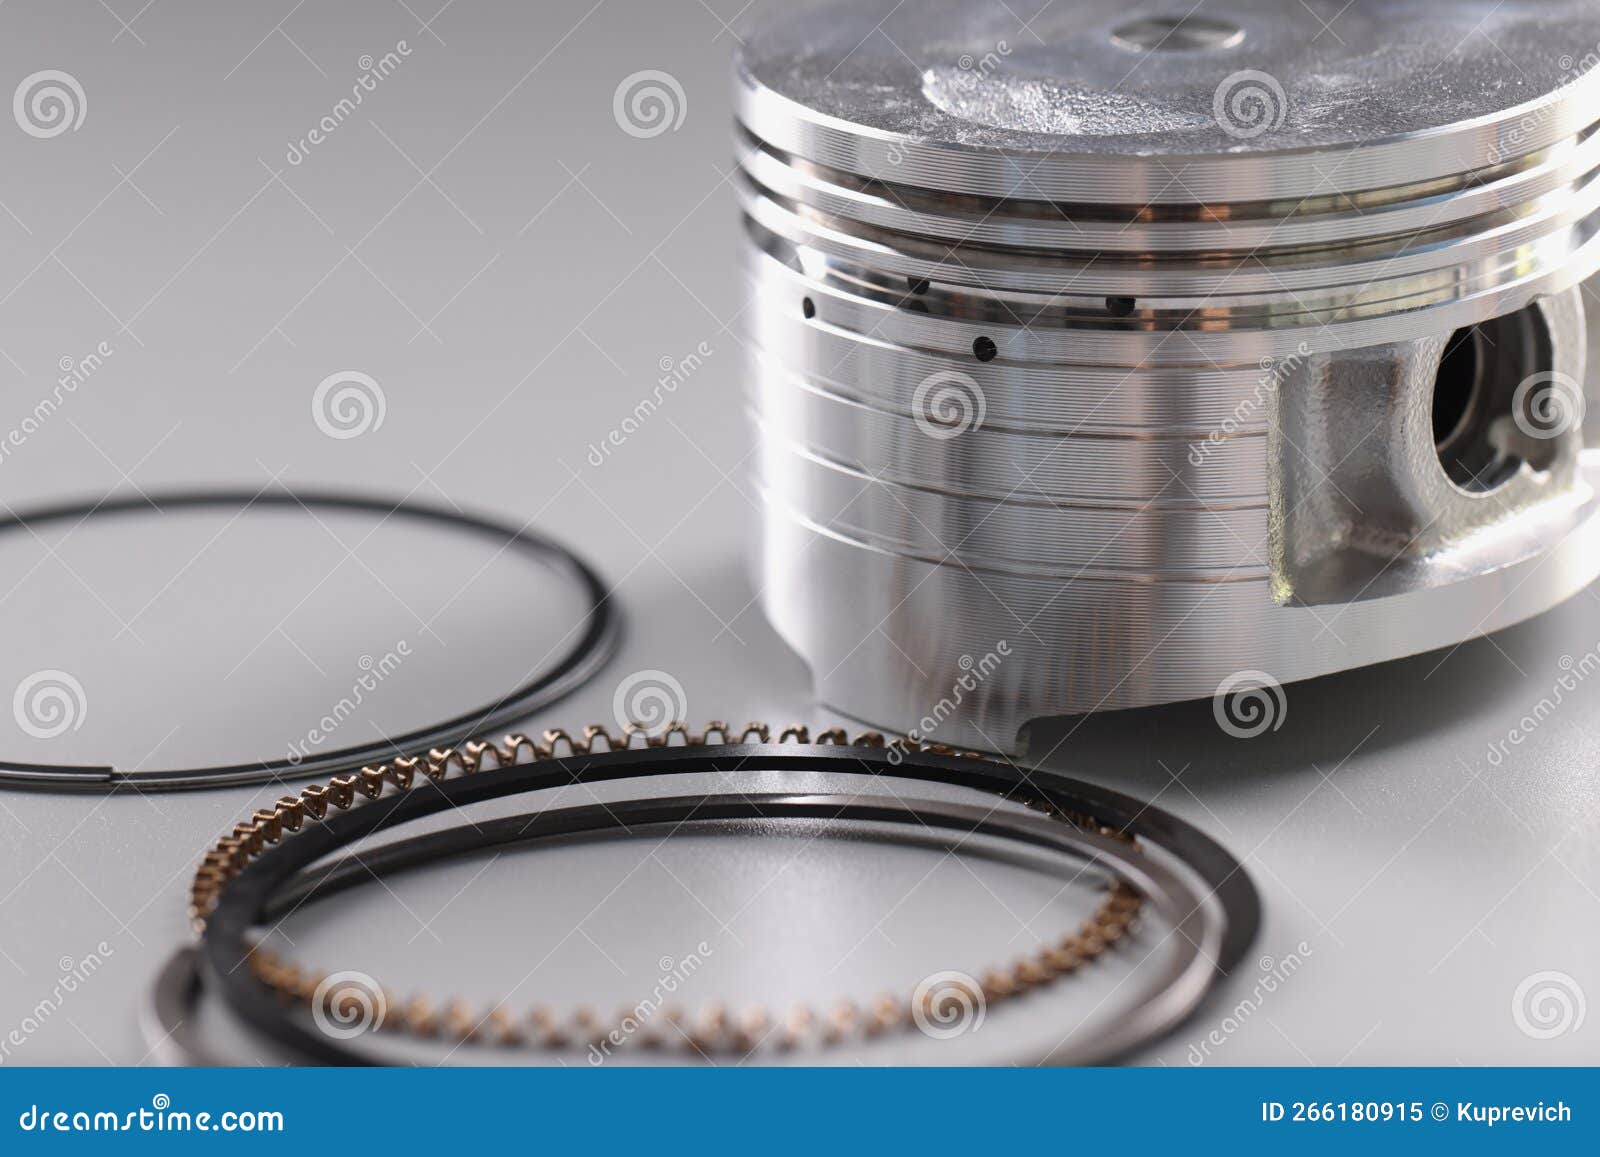 Can I DIY Repair or Adapt an Air Compressor Piston Ring? : r/MechanicAdvice